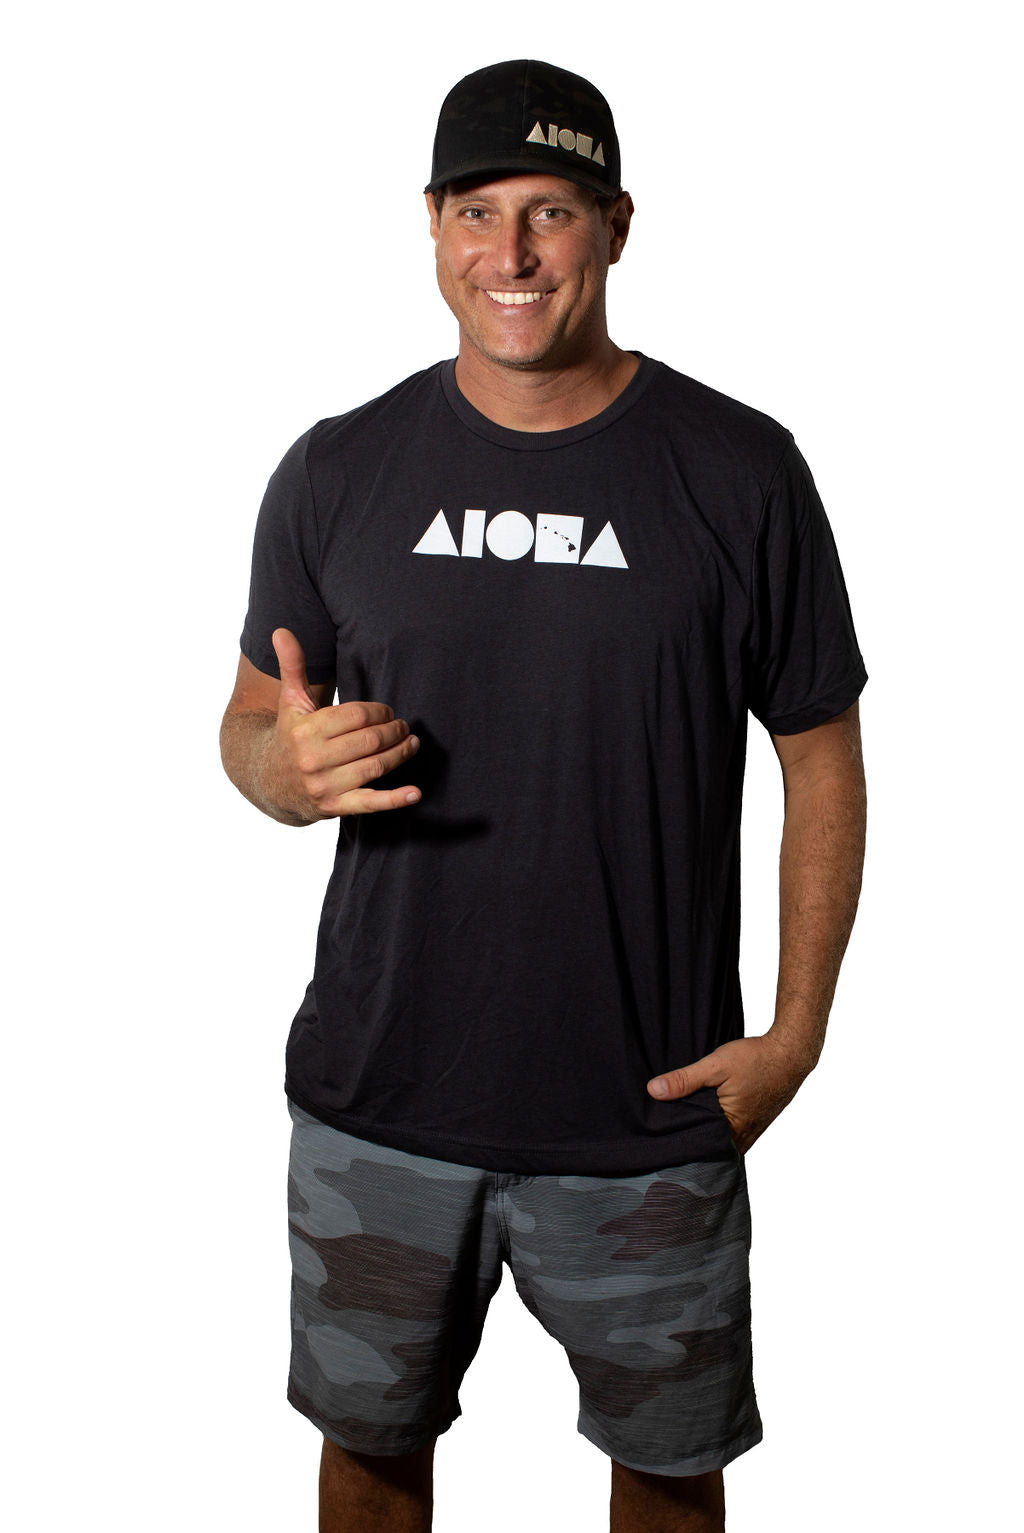 Soley Aloha small business owner, Stu, wearing an Aloha Island Shapes Unisex Tee throwing a shaka in Maui Hawaii